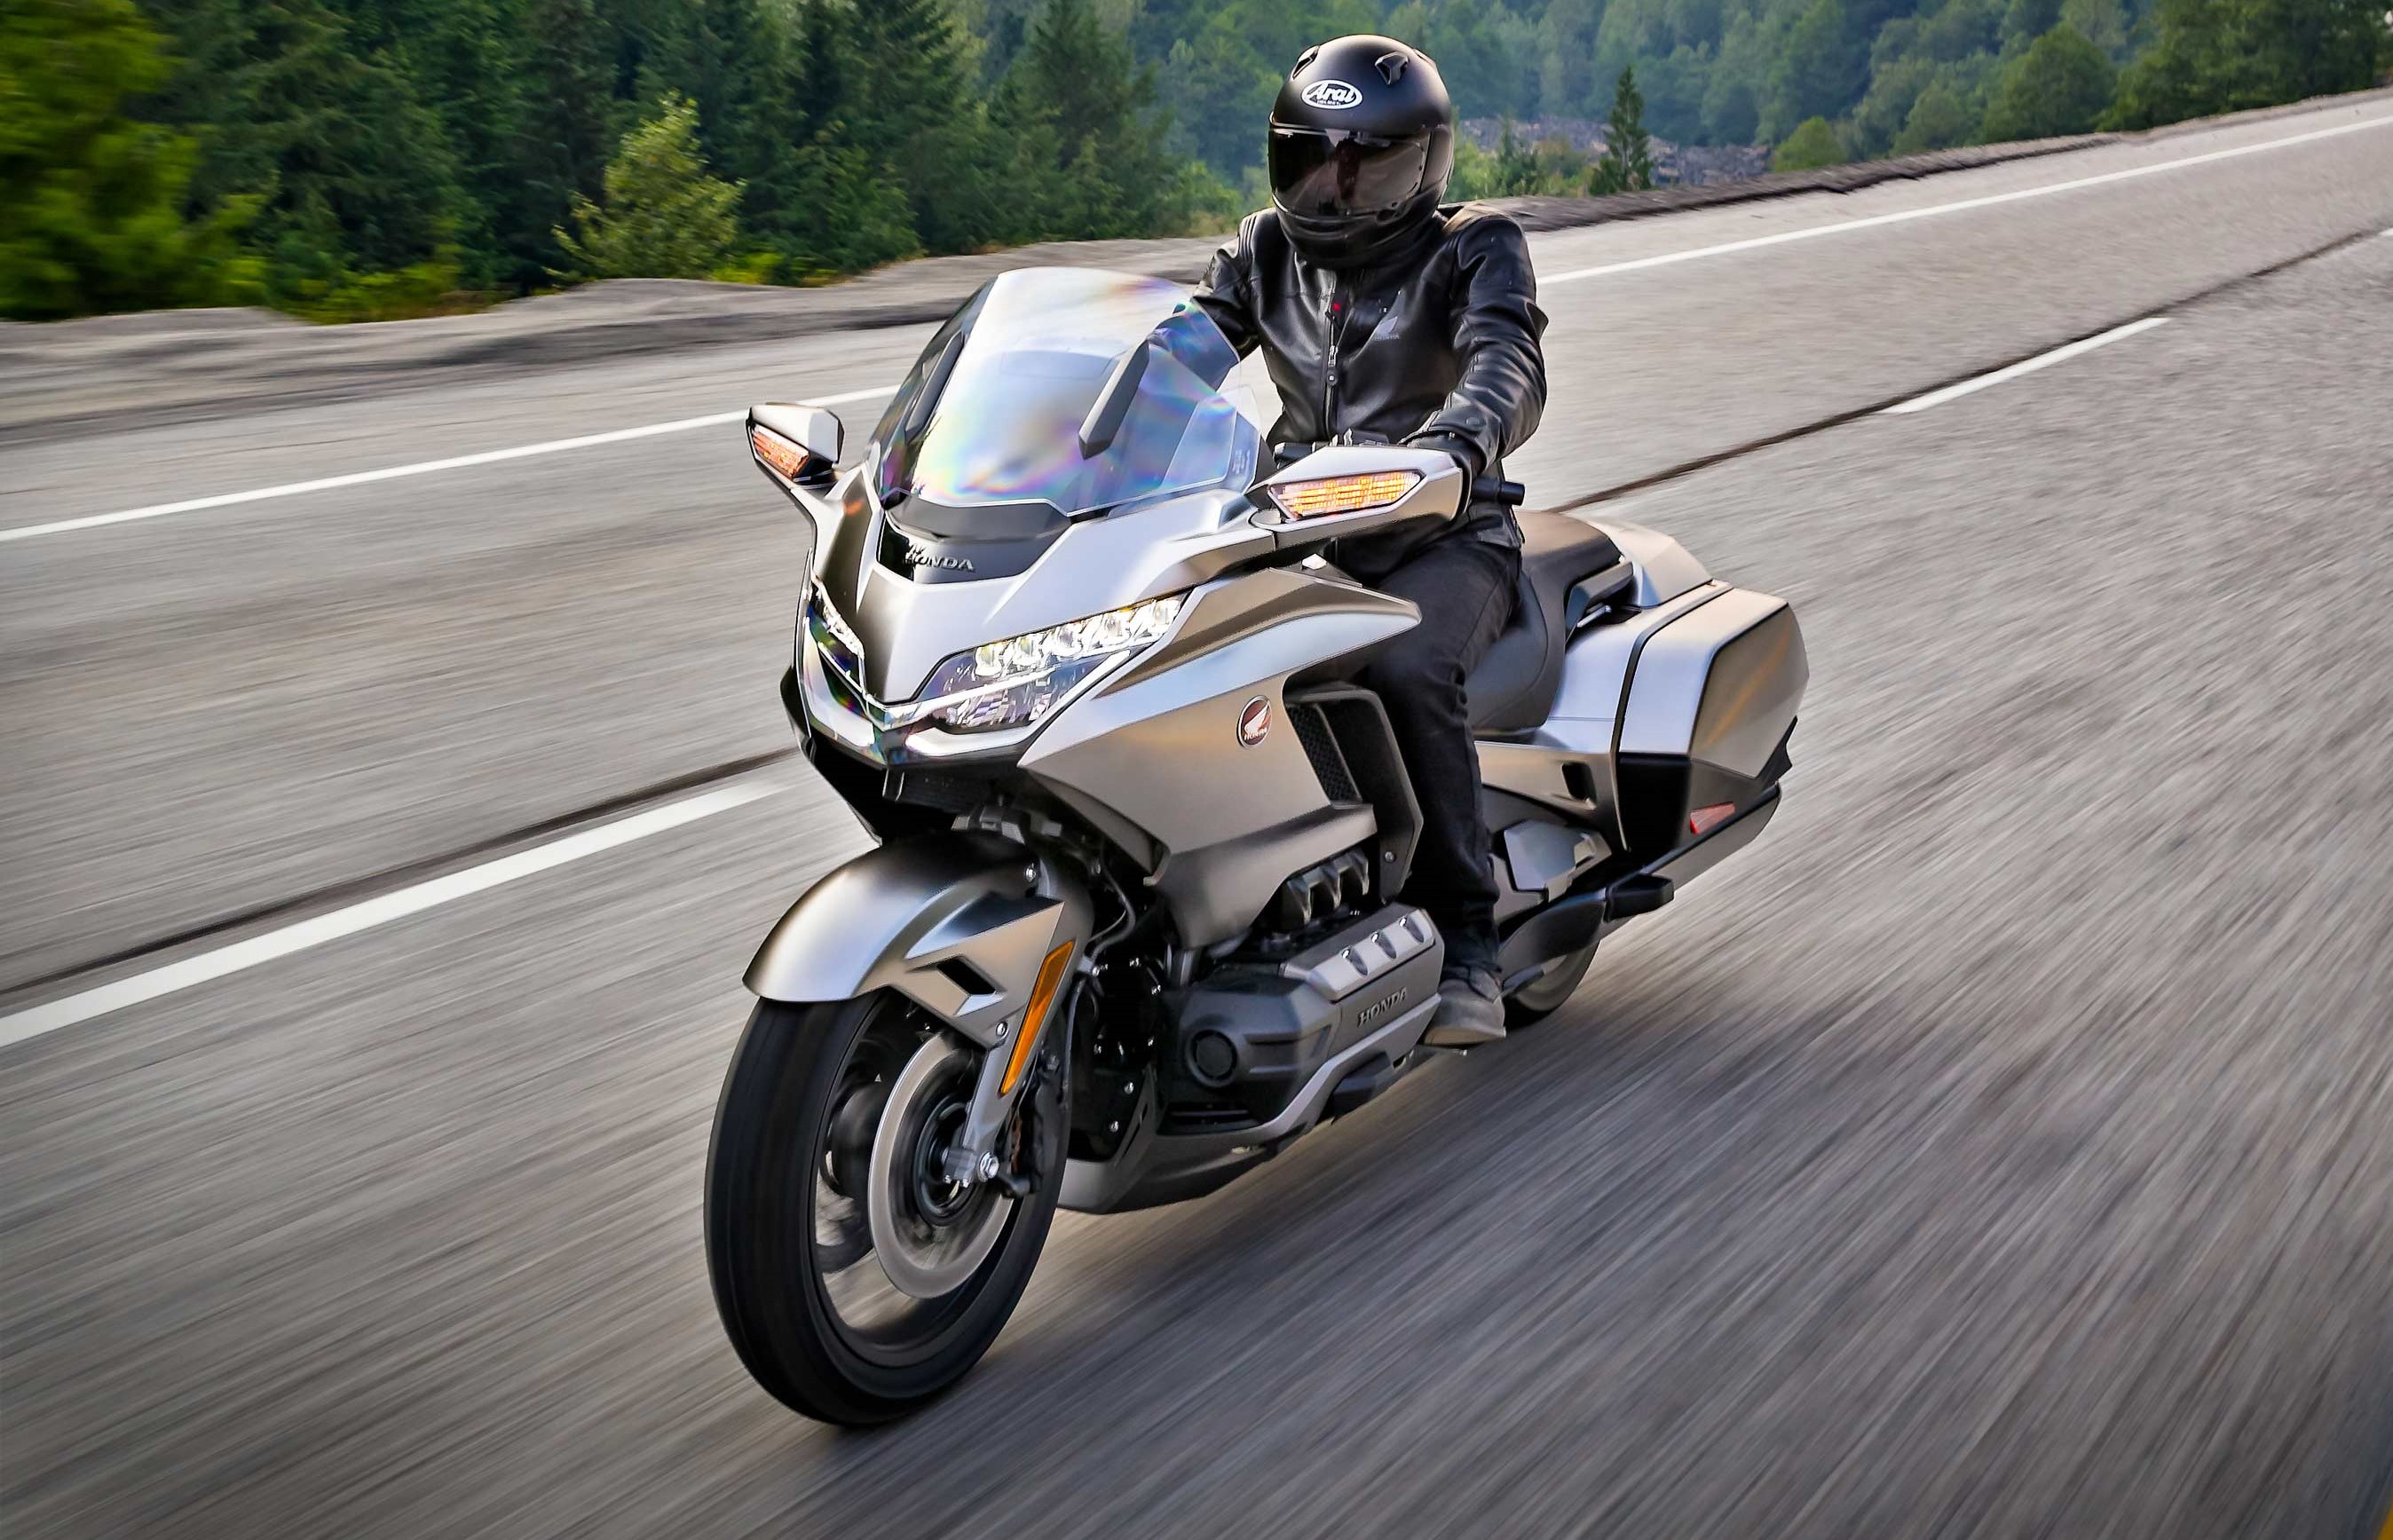 Honda Touring Motorcycles | tunersread.com